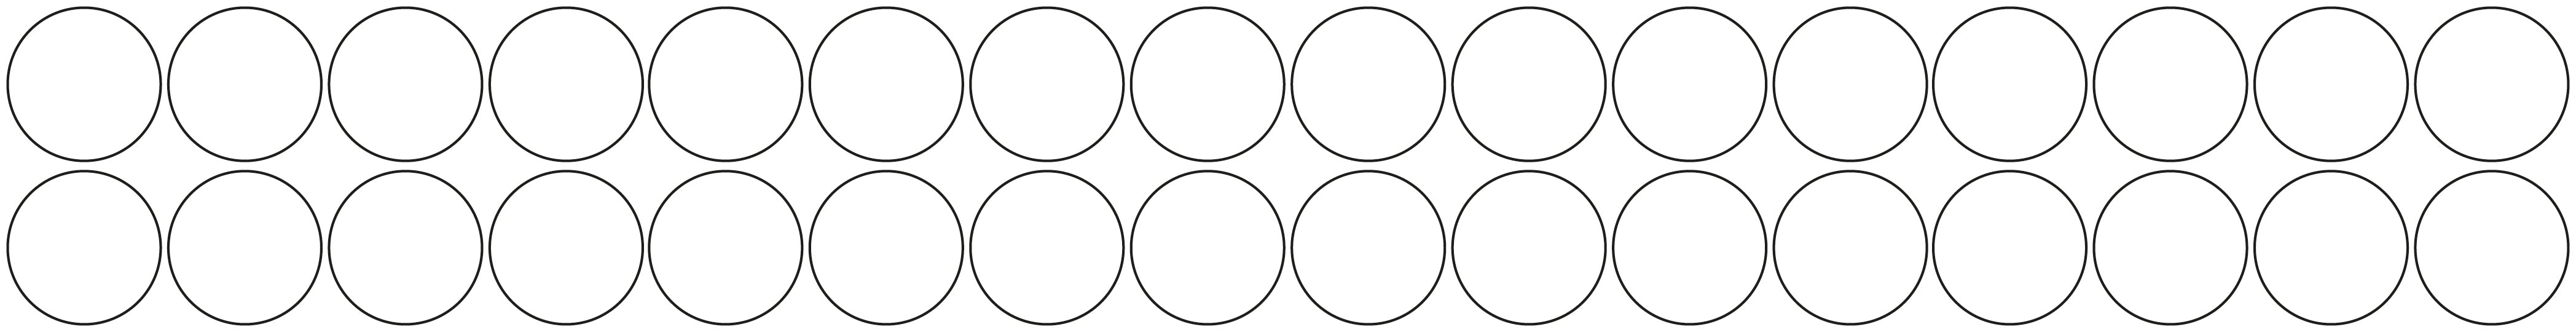 3M White/Silver Reflective Circles - 1m Roll 60mm Circles